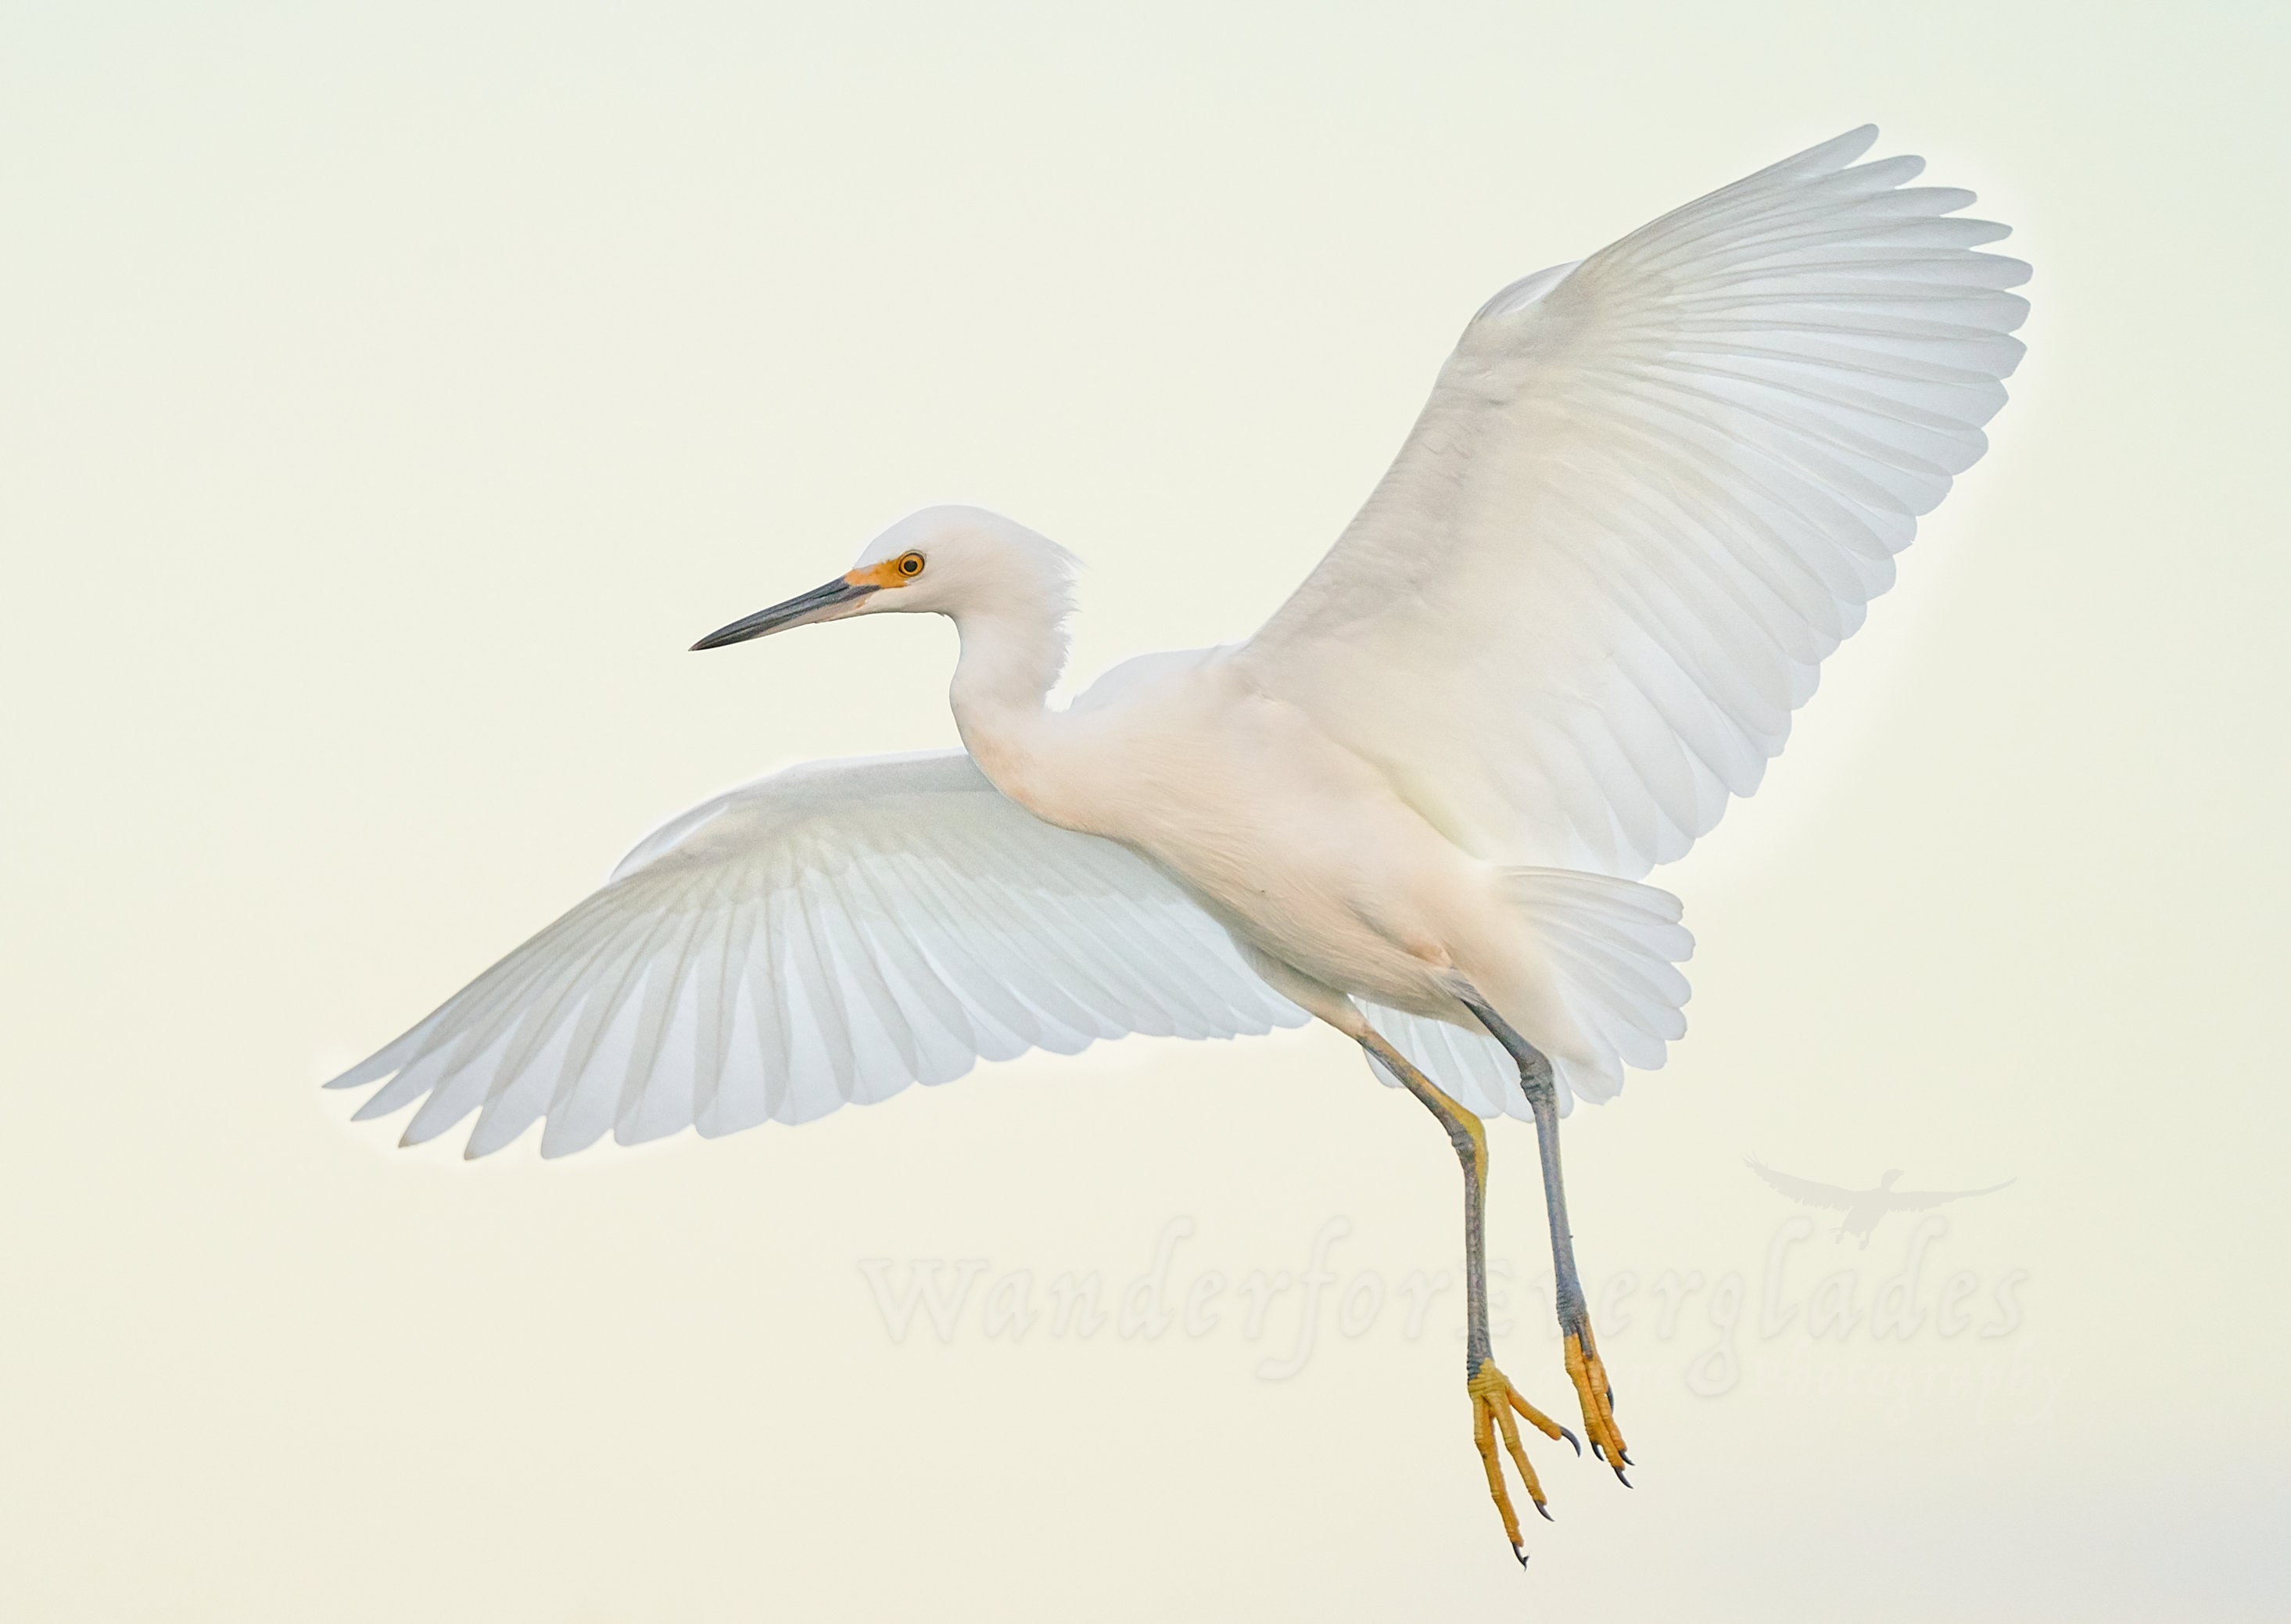 Snowy Egret Wings, Bird In Flight Picture, Florida Wildlife, 51% OFF